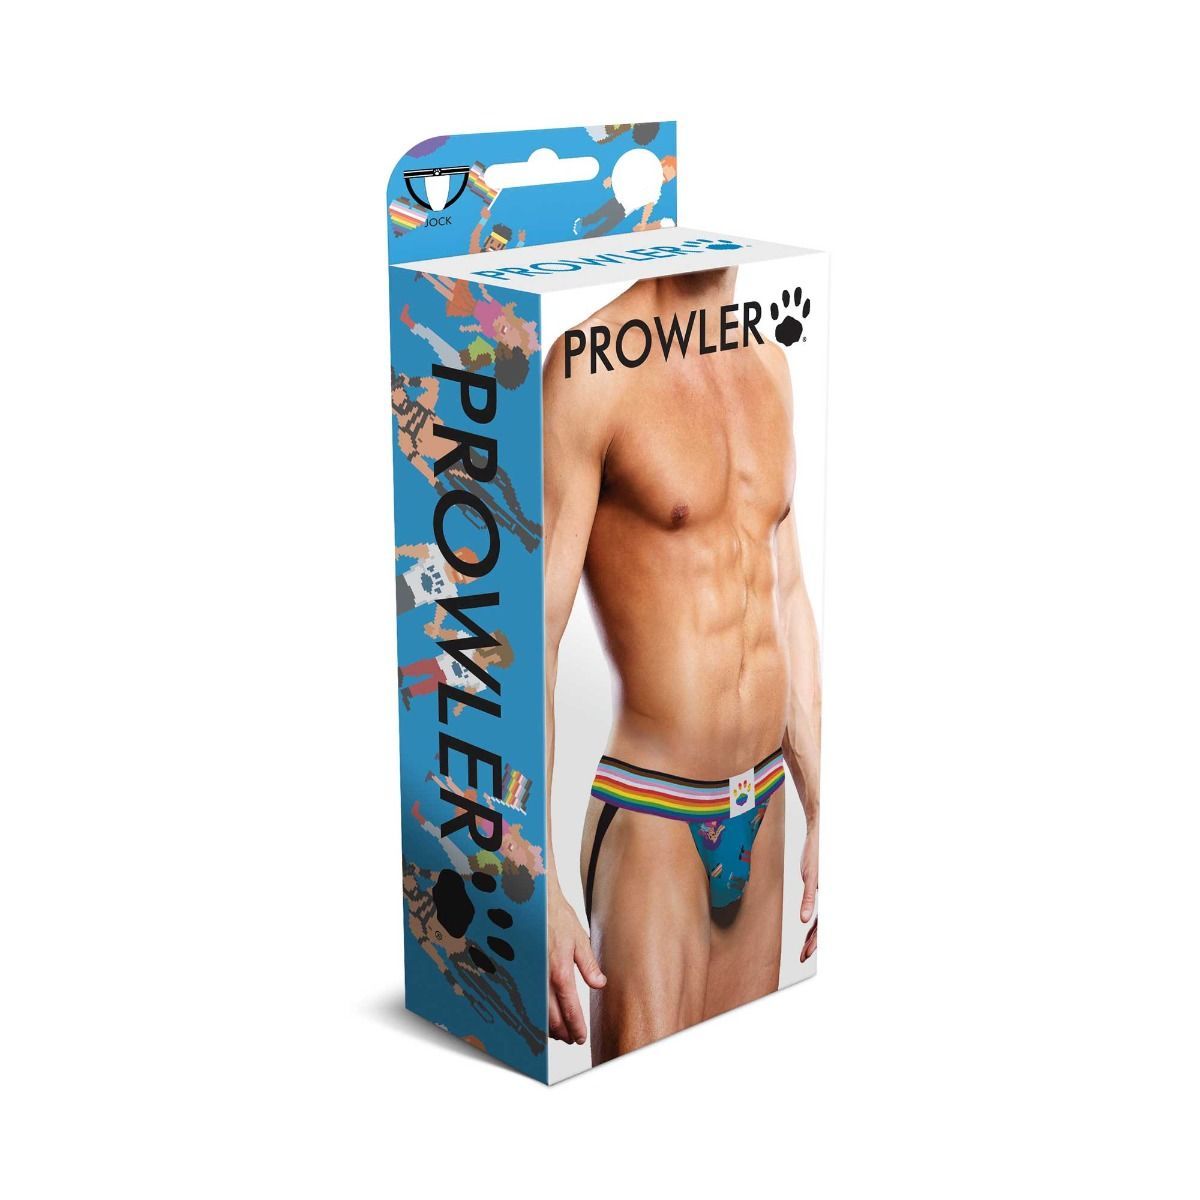 Prowler Pixel Art Gay Pride Collection Jock - One Stop Adult Shop